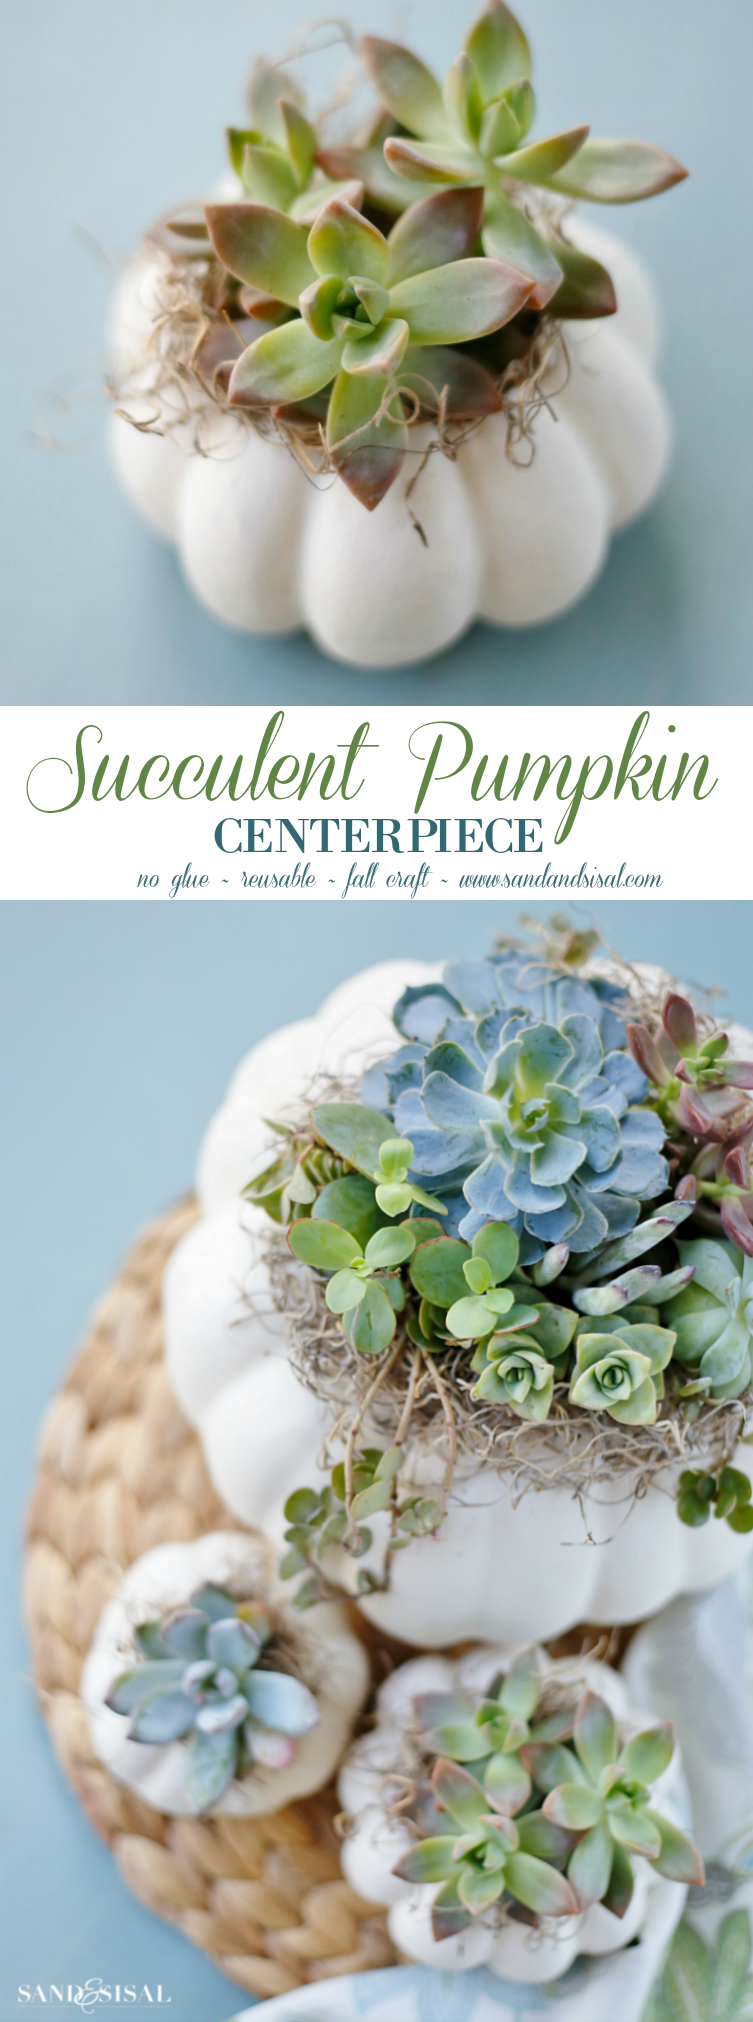 Succulent Pumpkin Centerpiece DIY